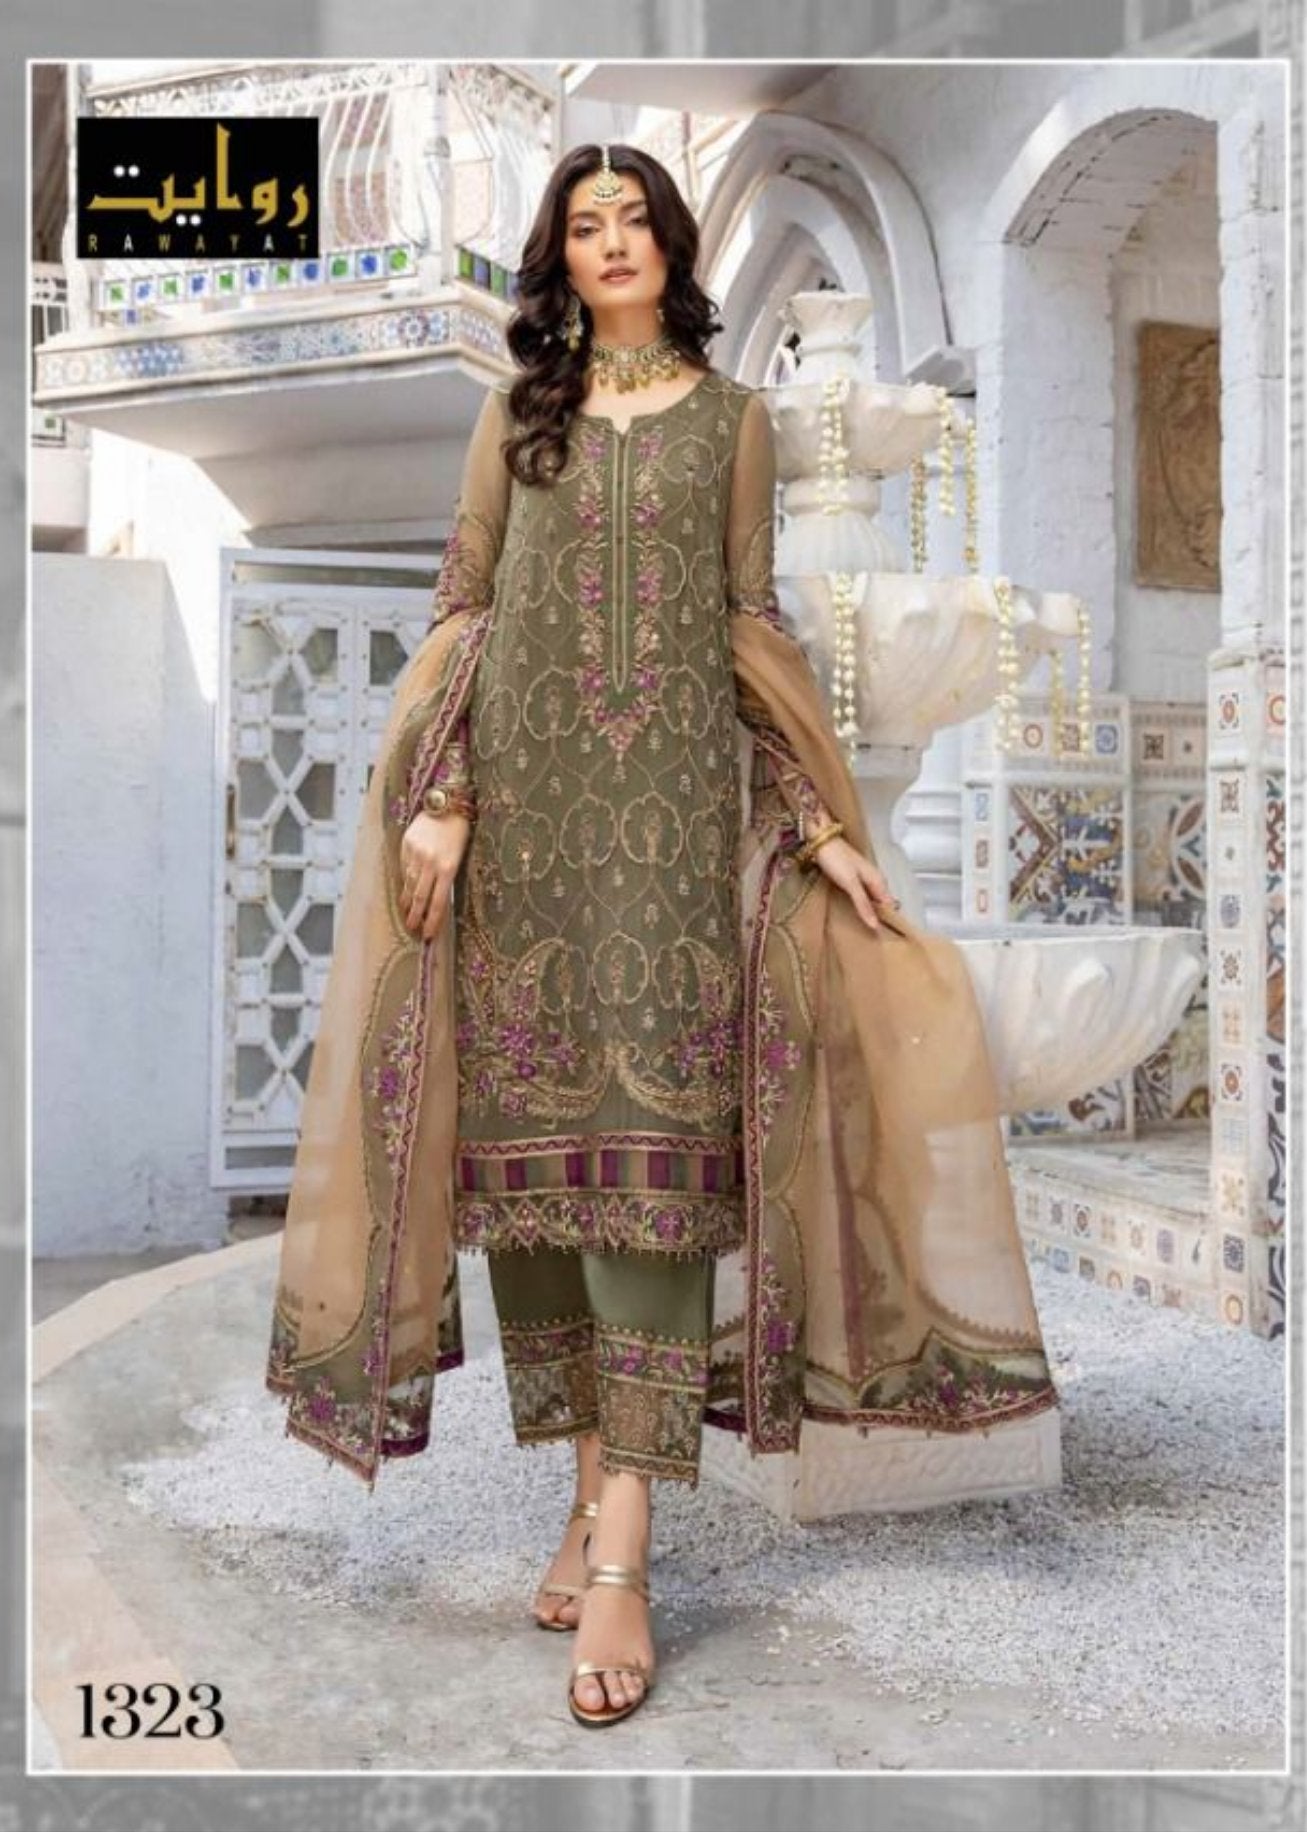 1323 Charizma Wedding Wear Georgette Pakitstani Suit Shopindiapparels.com 